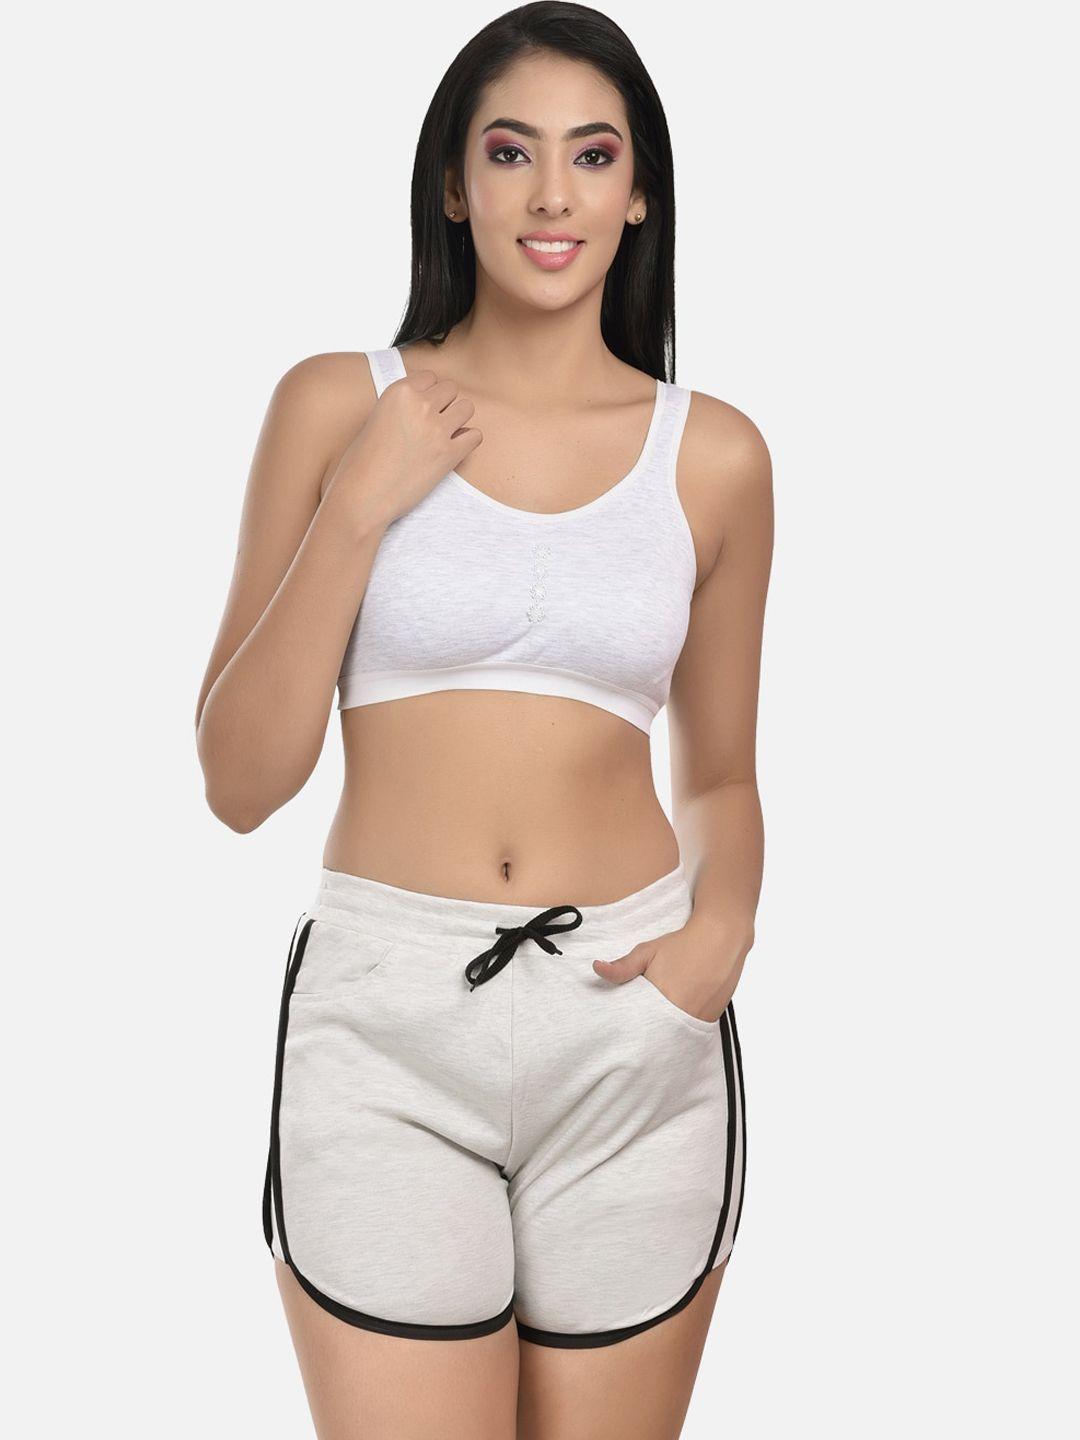 styfun-women-grey-cotton-blend-solid-sports-bra-&-shorts-lingerie-set